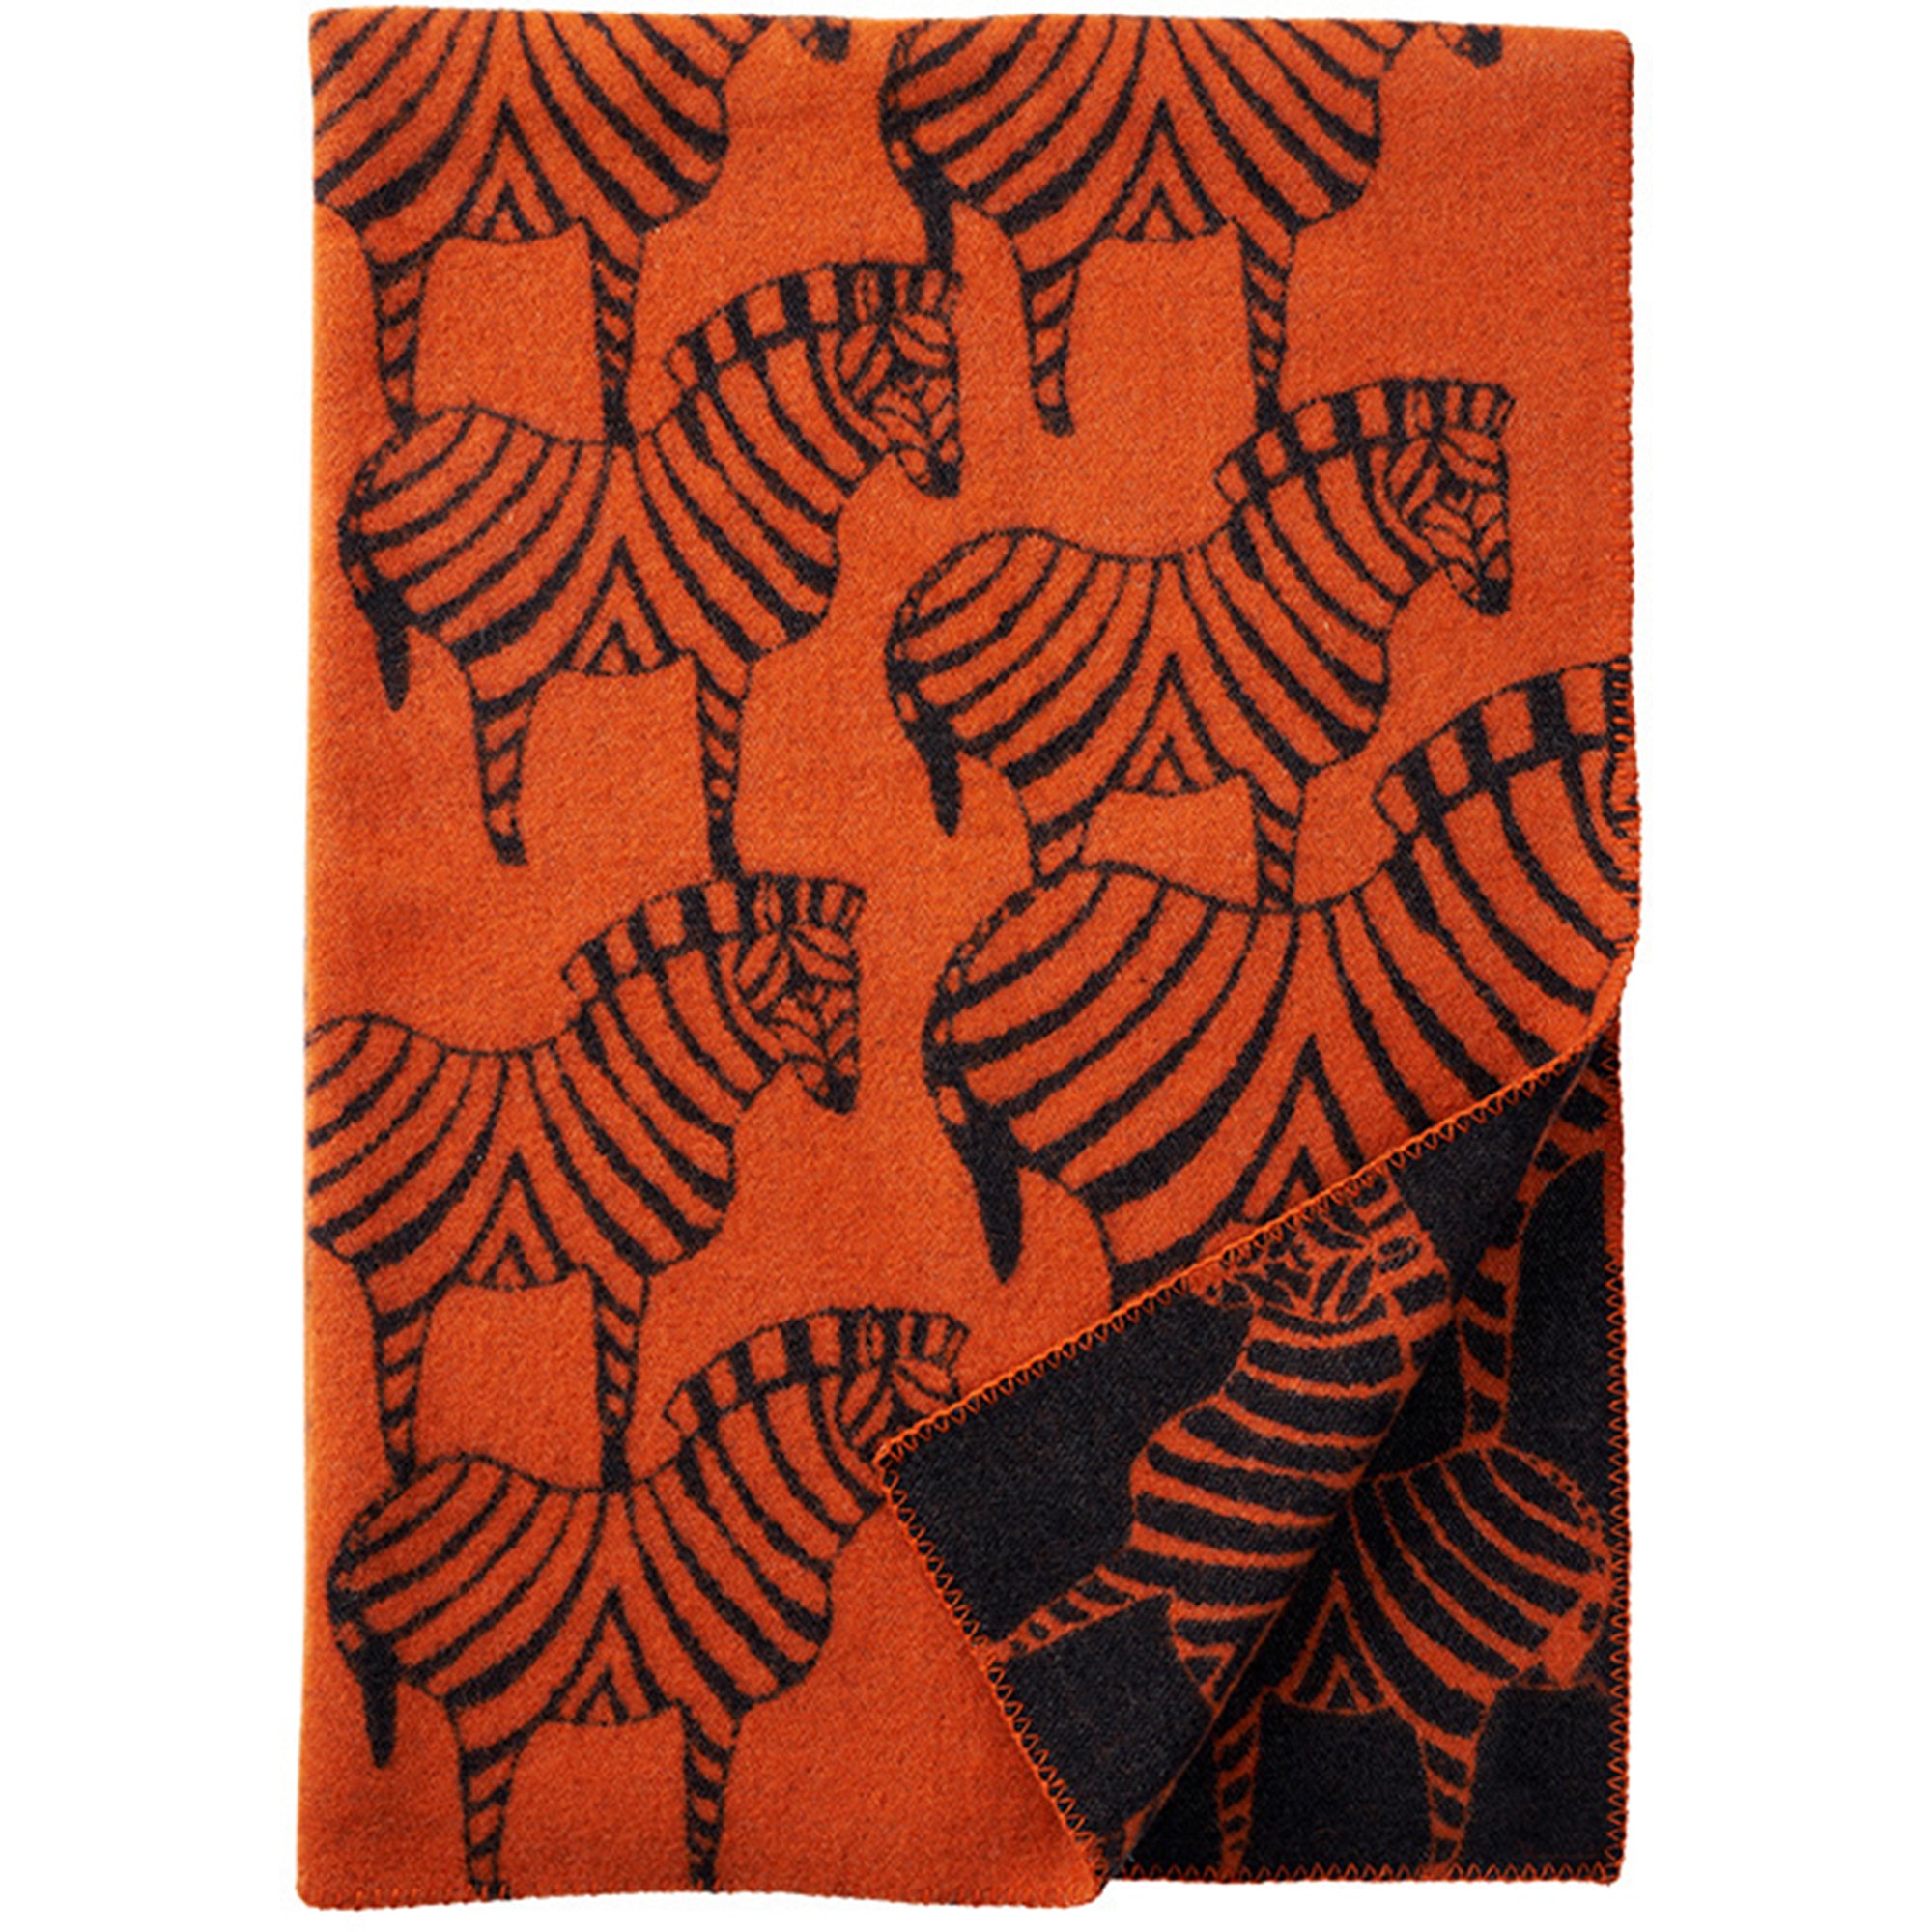 Zebra Orange 130x180cm Lambswool Blanket